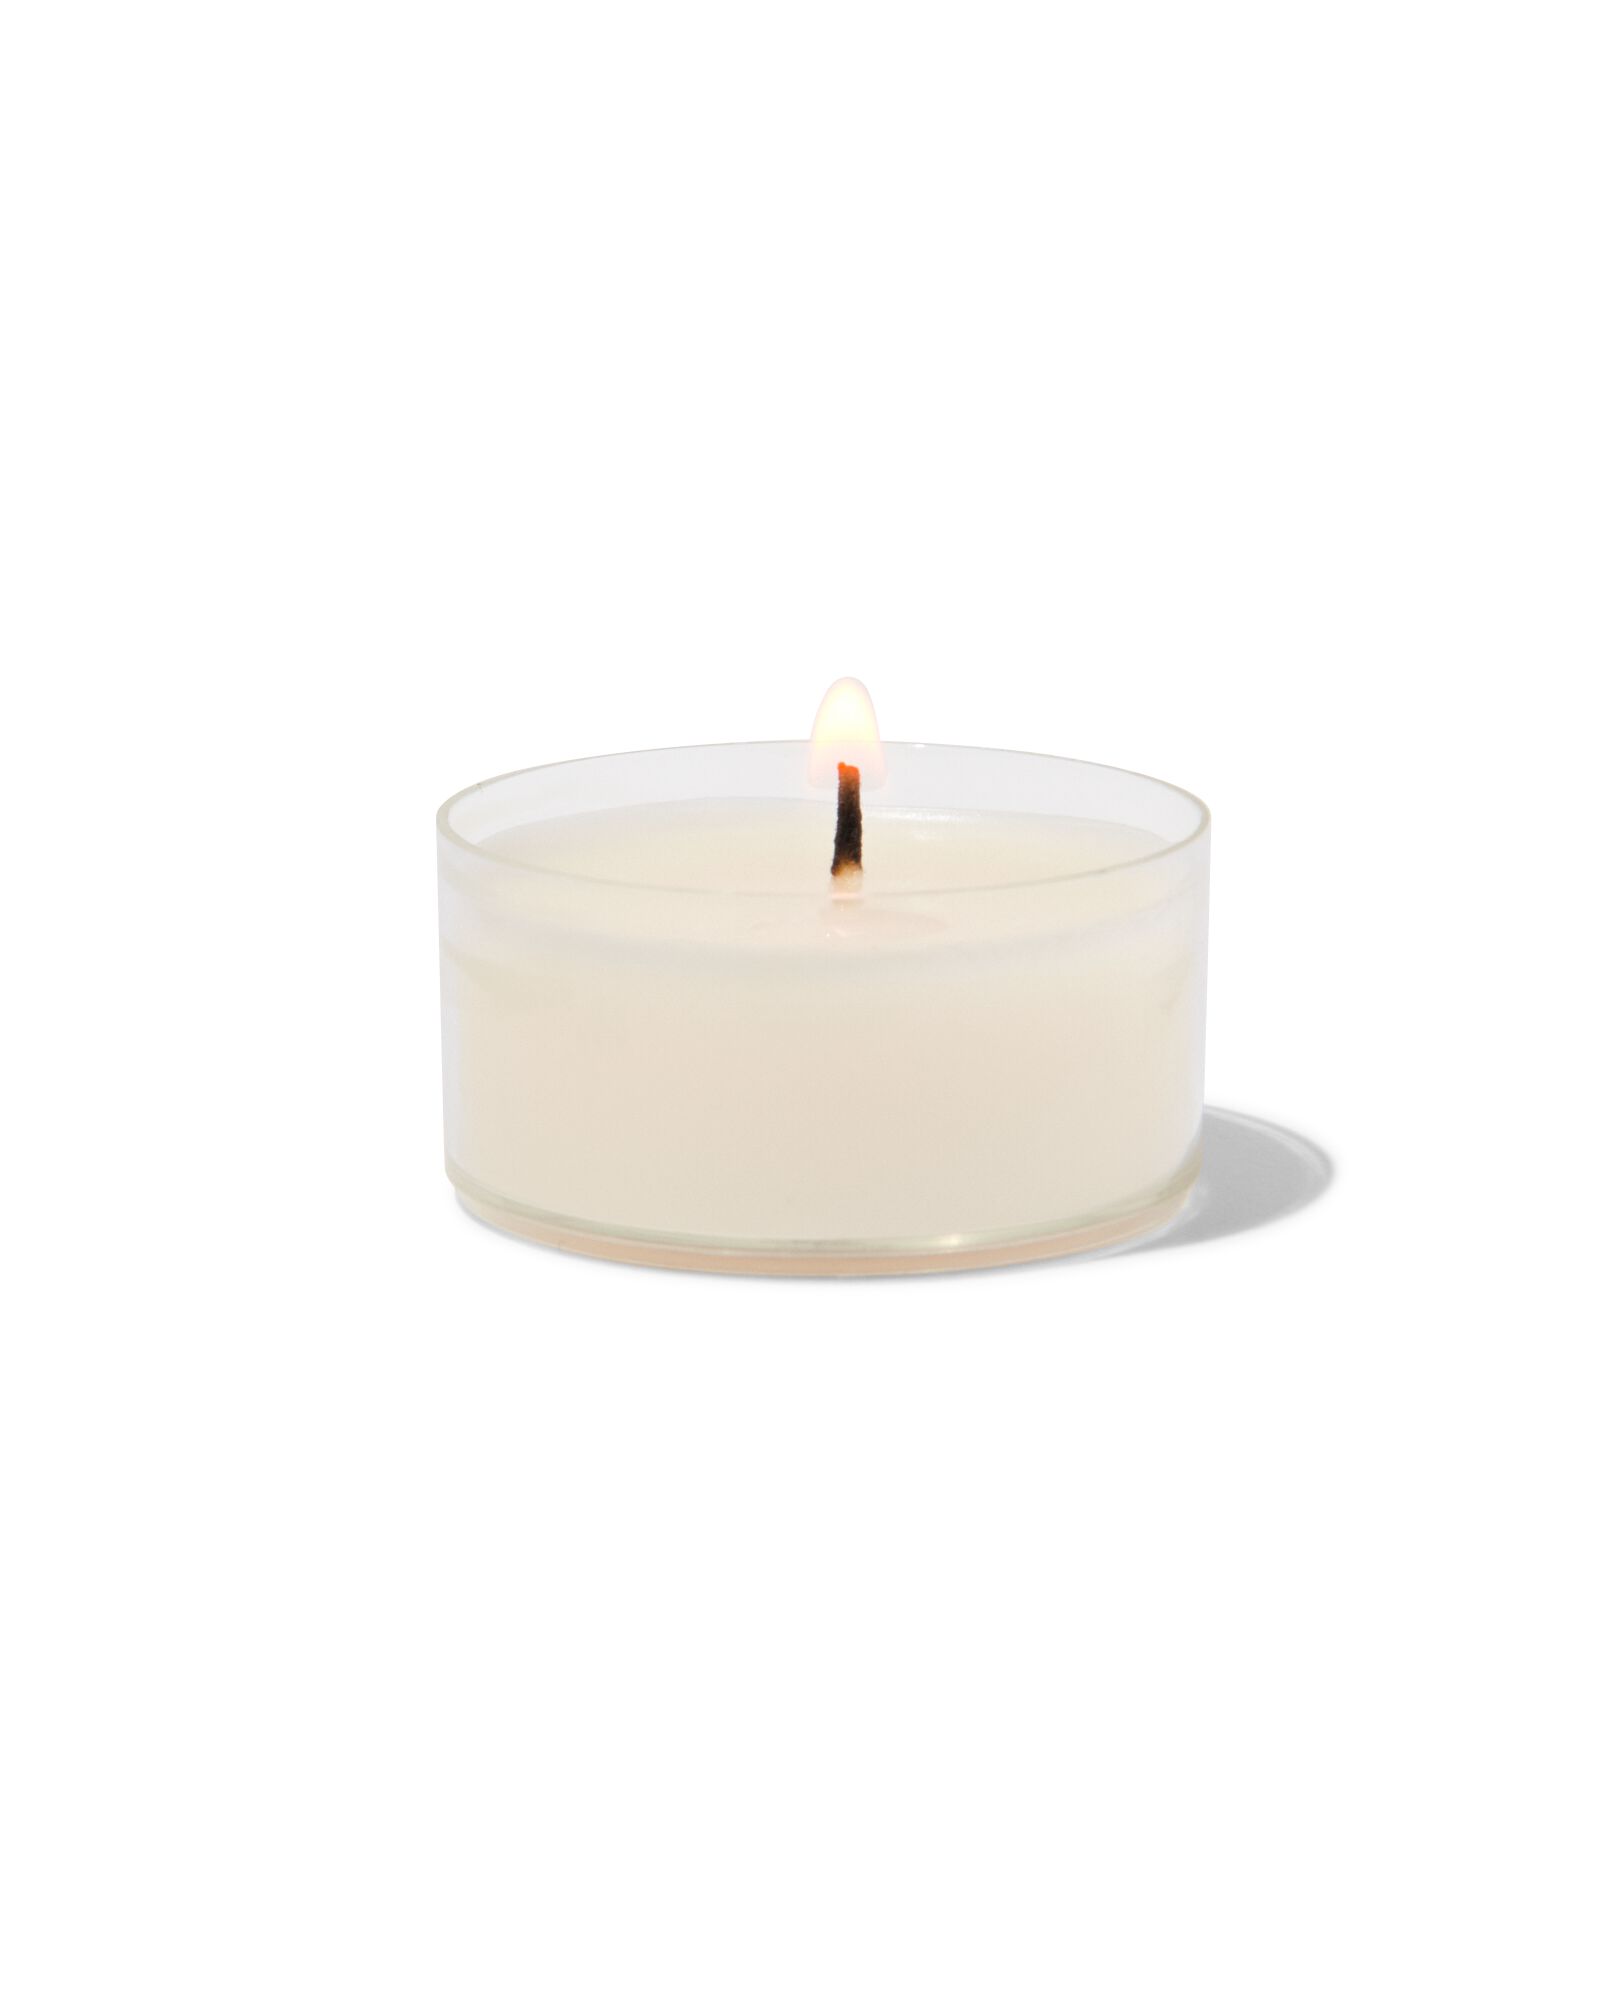 18 bougies chauffe-plat parfumées calm - HEMA